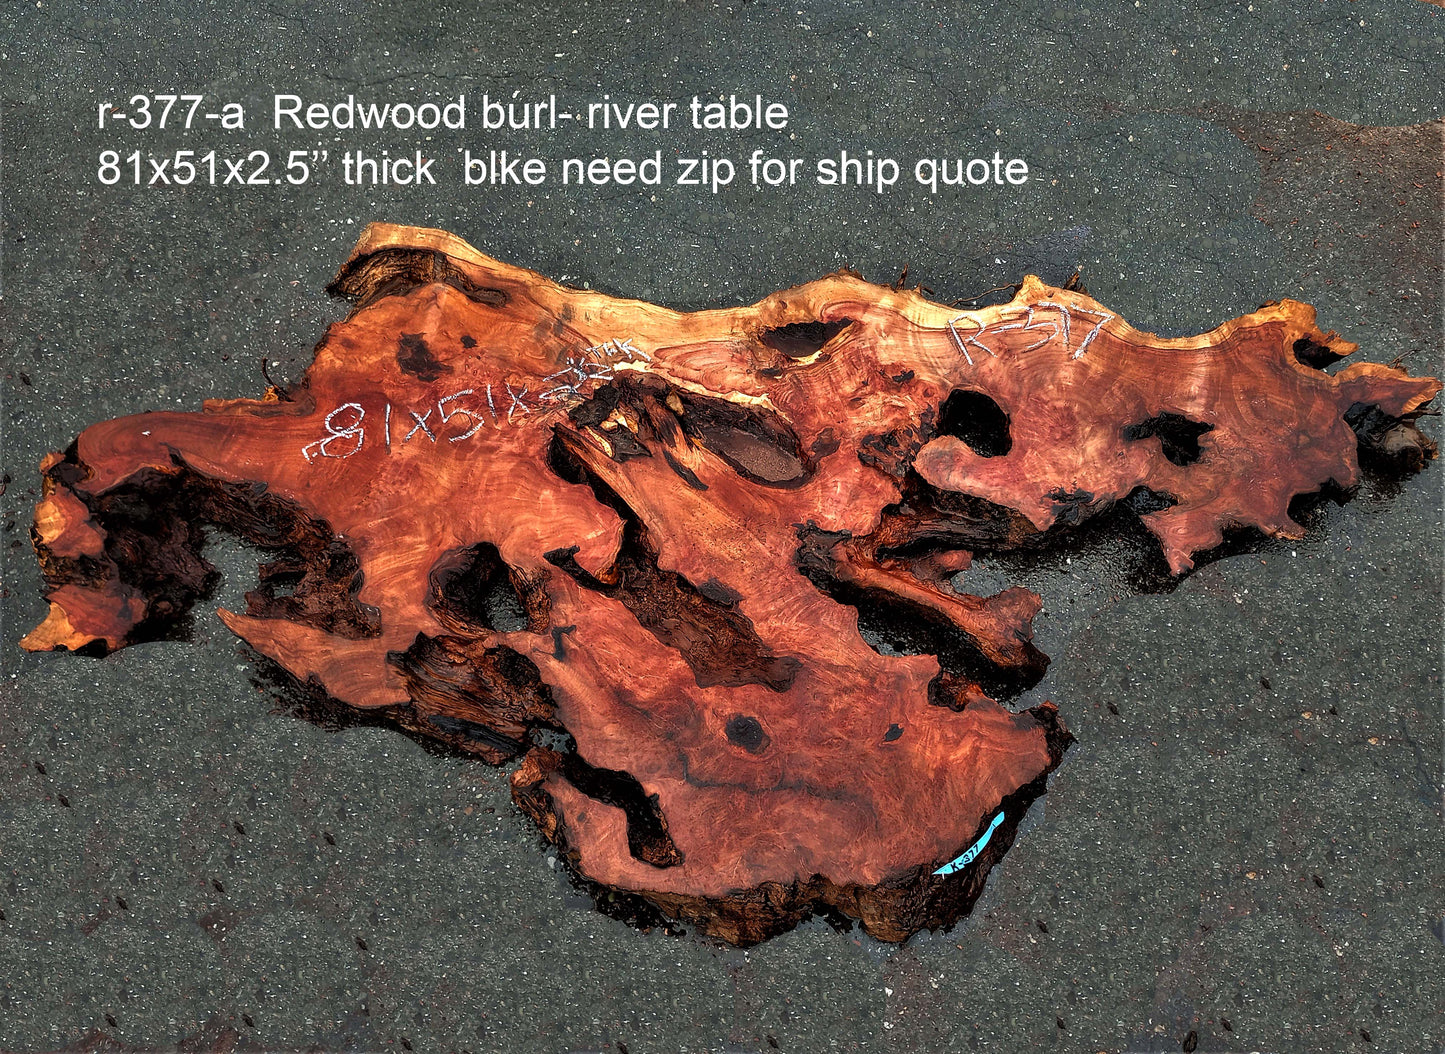 redwood burl slab | epoxy river table | Headboard | DIY wood crafts | r-377